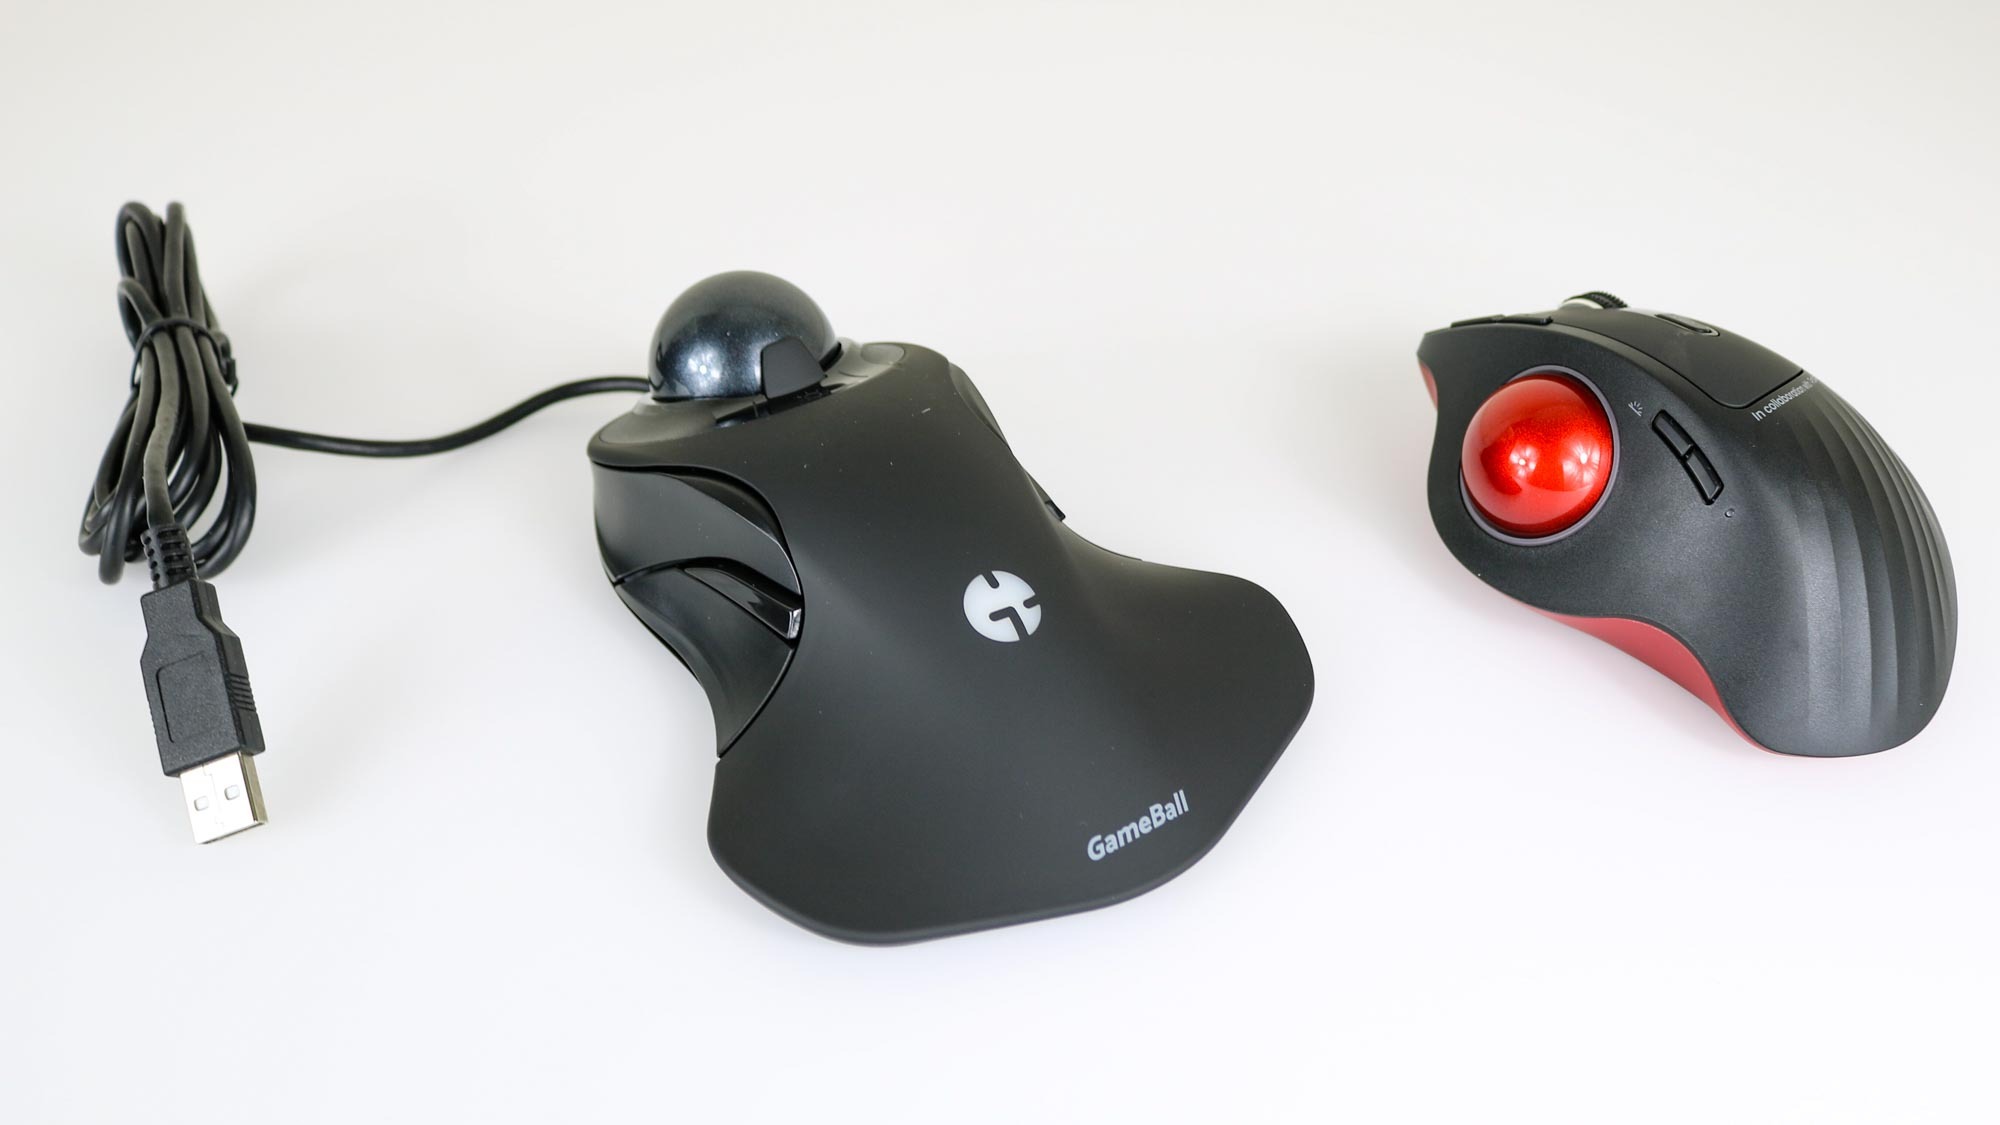 The GameBall Thumb next to the original GameBall mouse